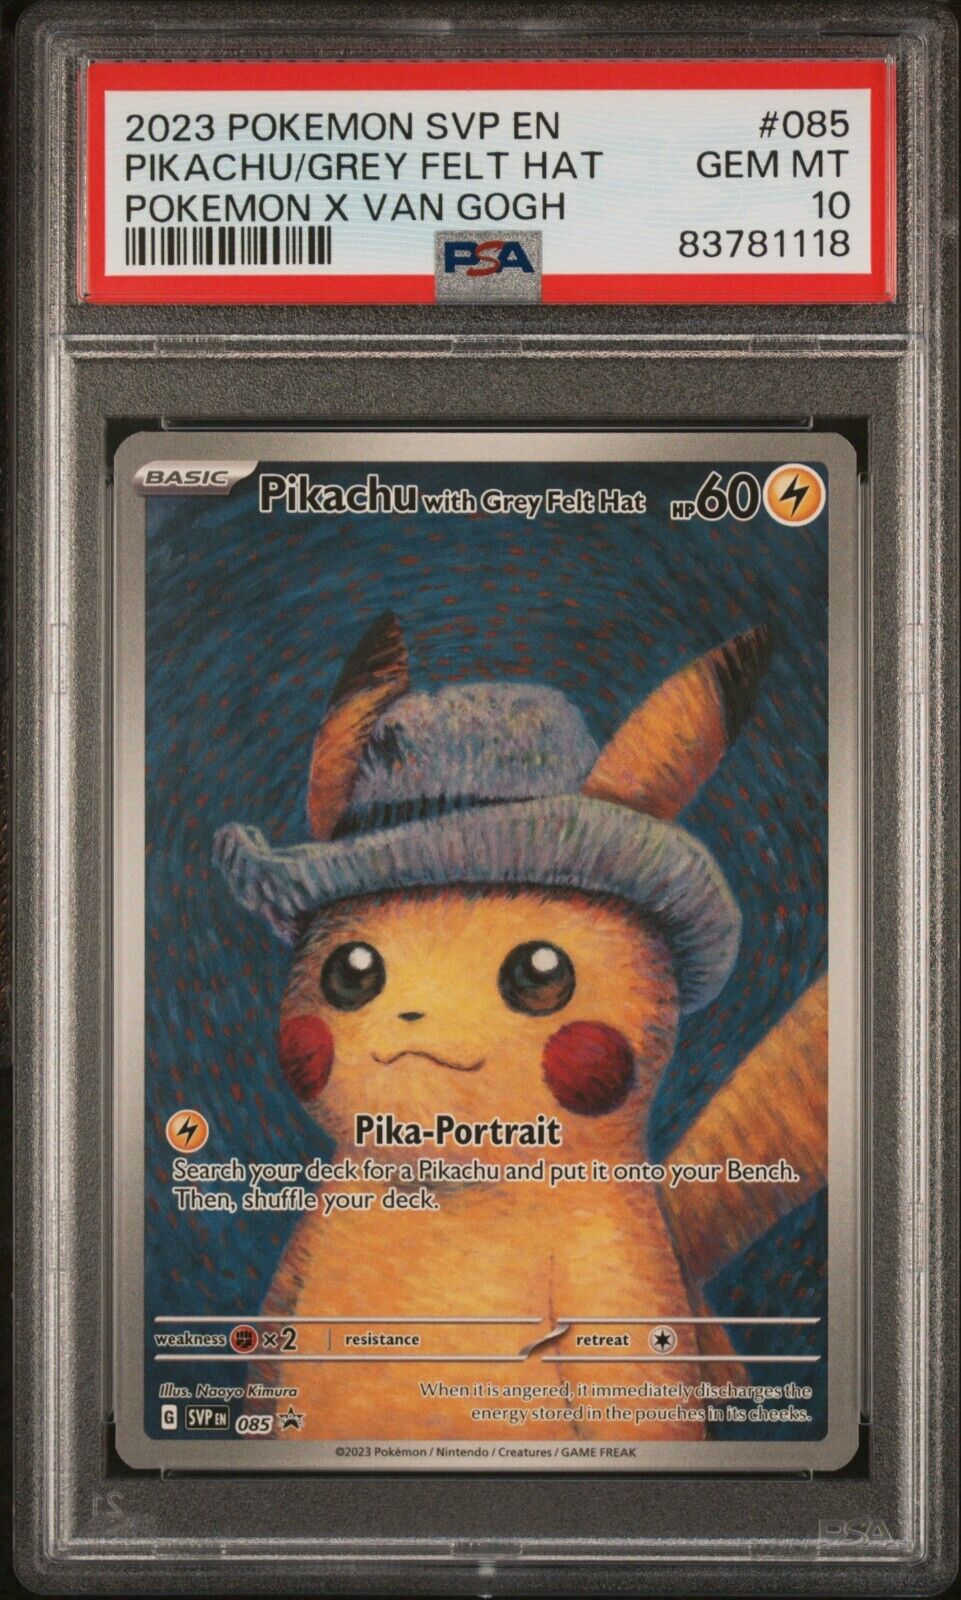 2023 Pokemon x Van Gogh Pikachu with Grey Felt Hat 085 Promo PSA 10 GEM MINT 